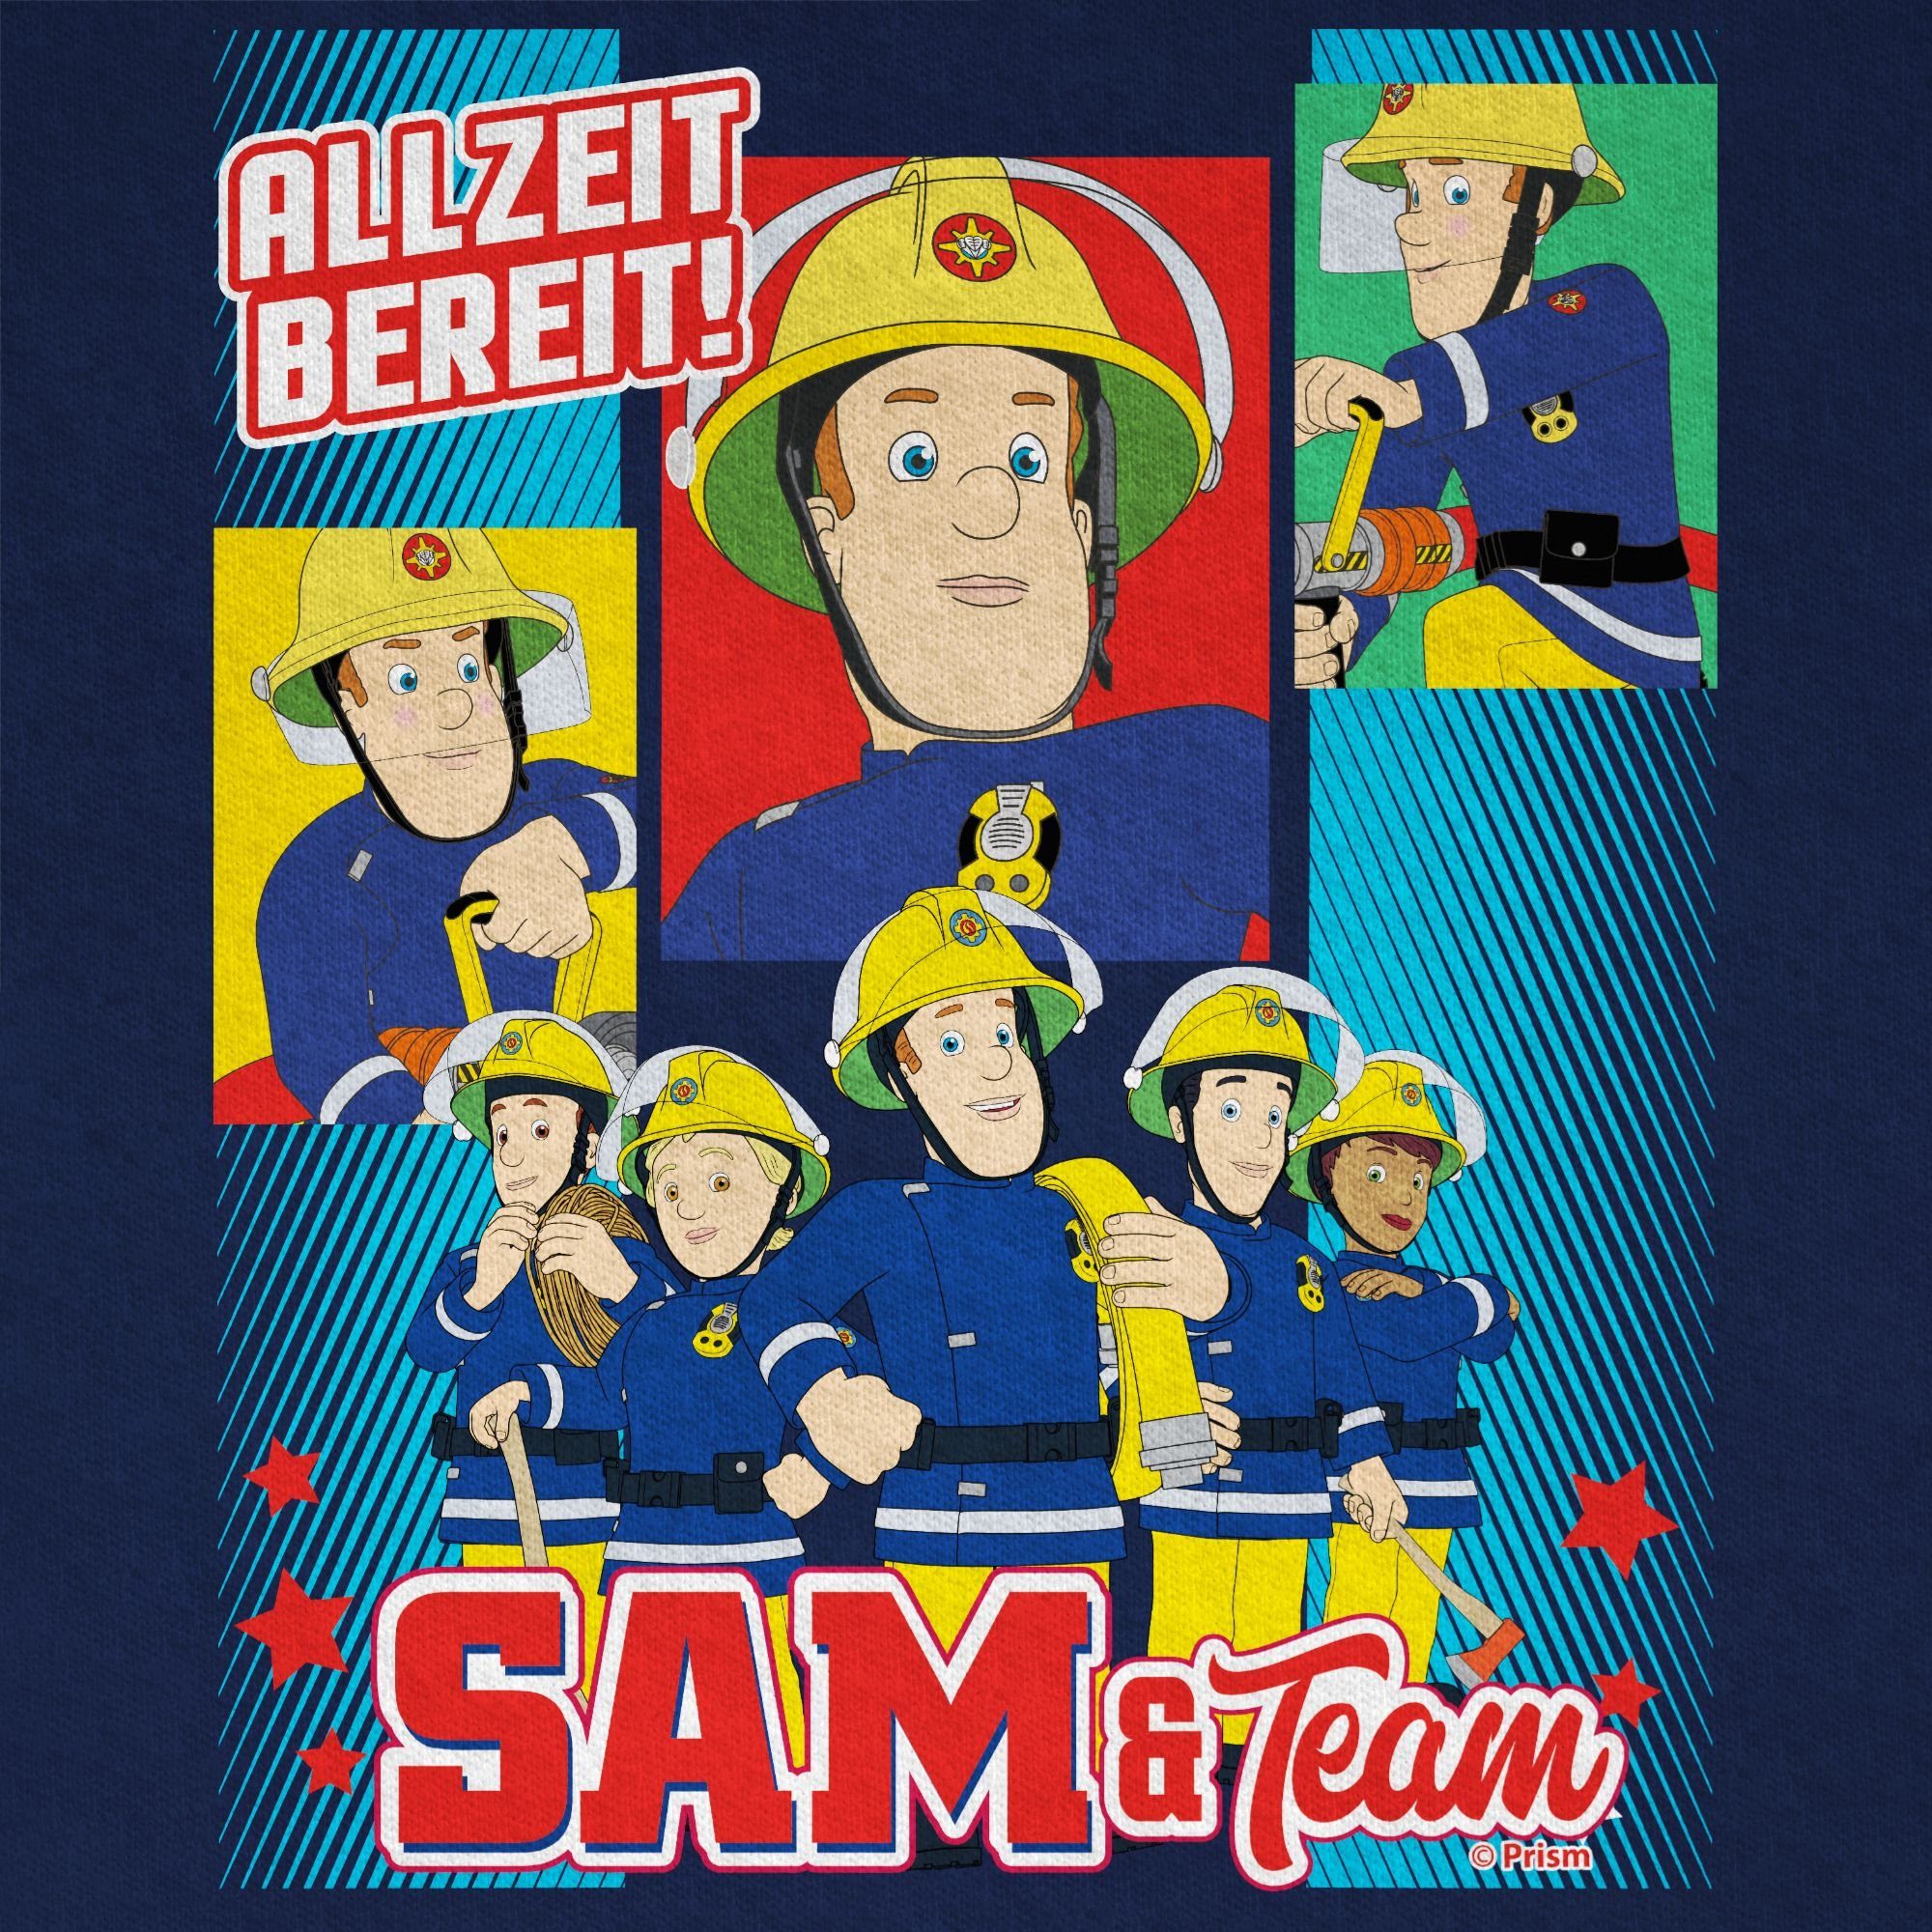 Shirtracer T-Shirt Allzeit bereit! - Sam 03 & Jungen Dunkelblau Feuerwehrmann Team Sam